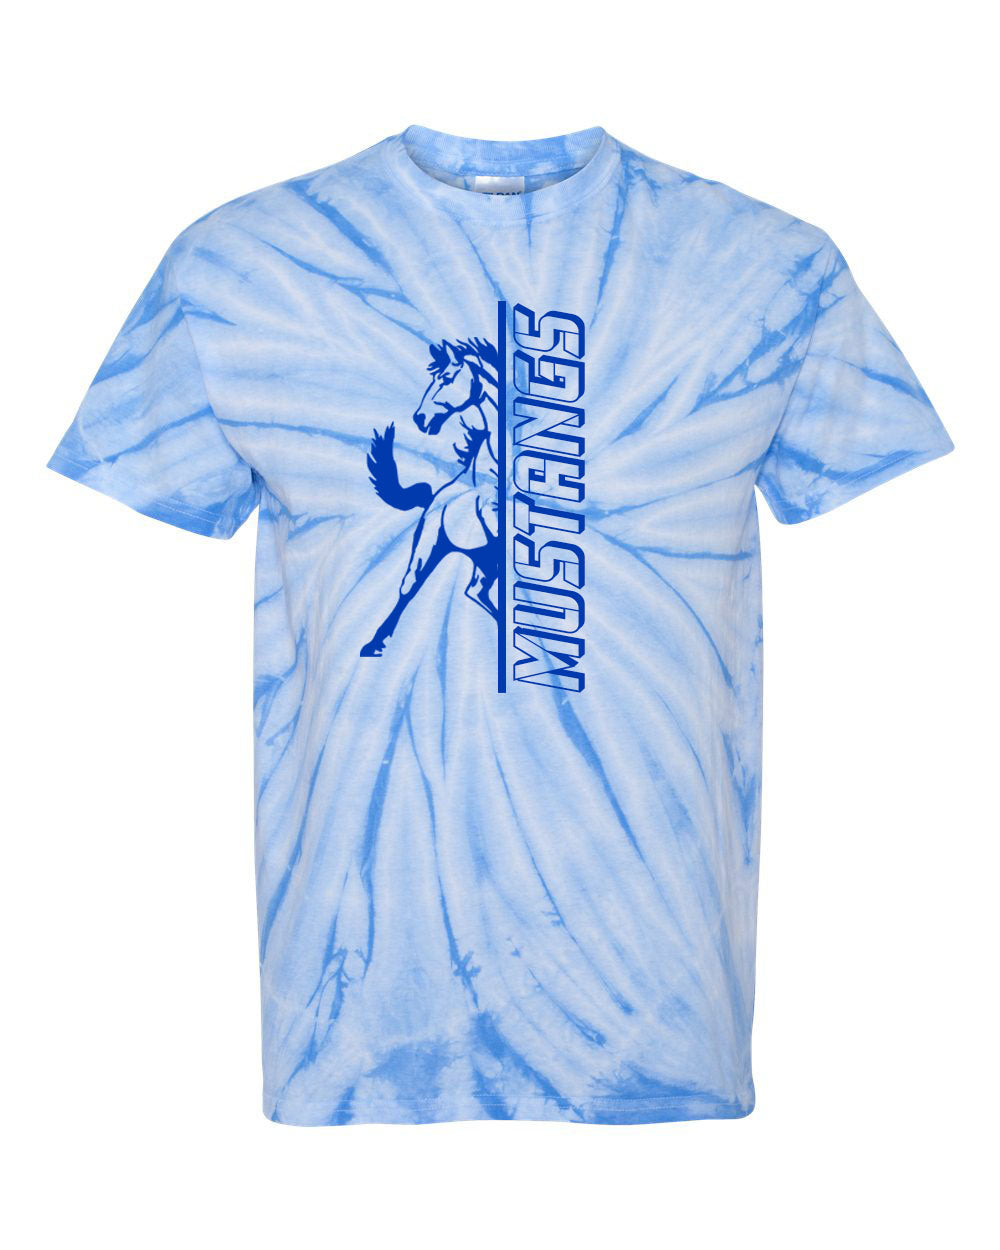 Frelinghuysen Design 14 Tie Dye t-shirt